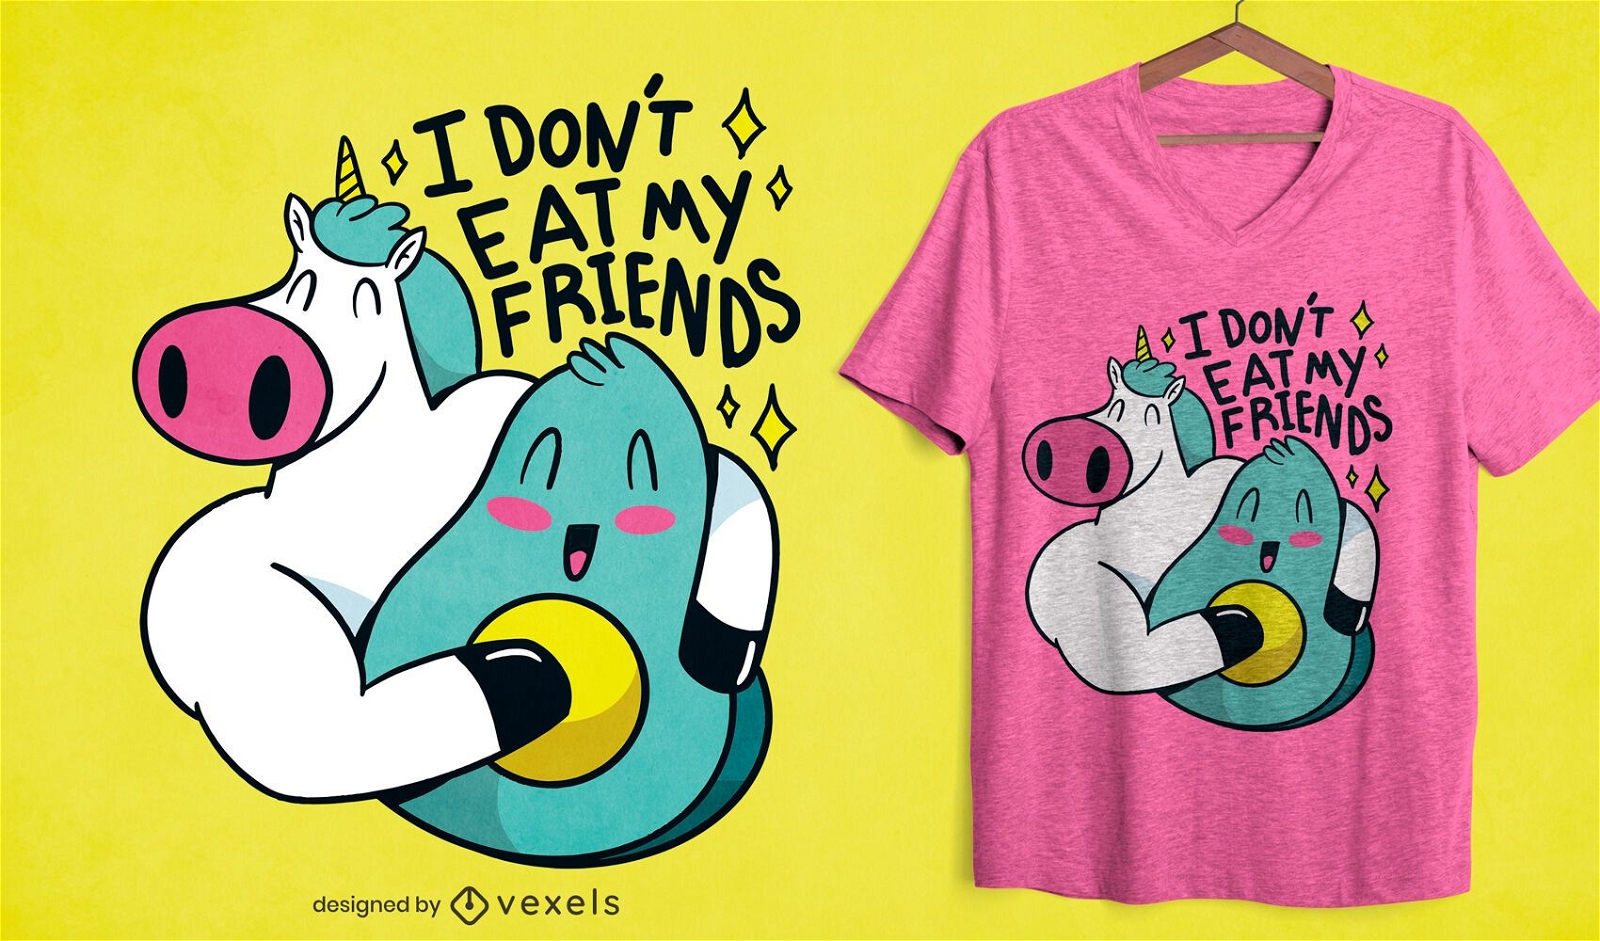 Don't eat my friends t-shirt design